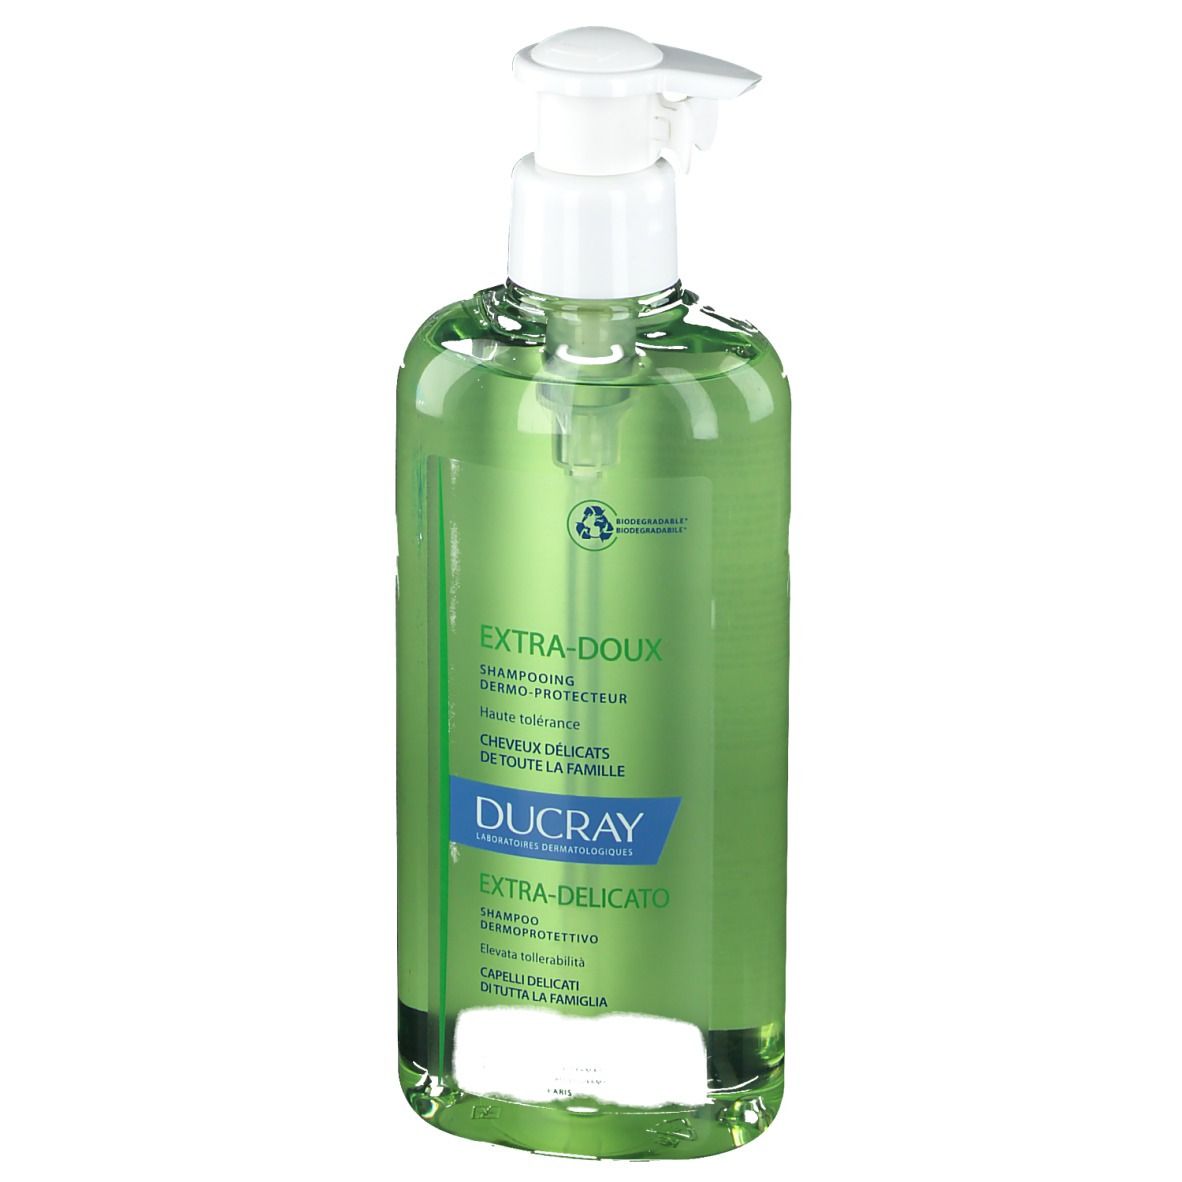 DUCRAY Extra Delicato Shampoo Dermoprotettivo